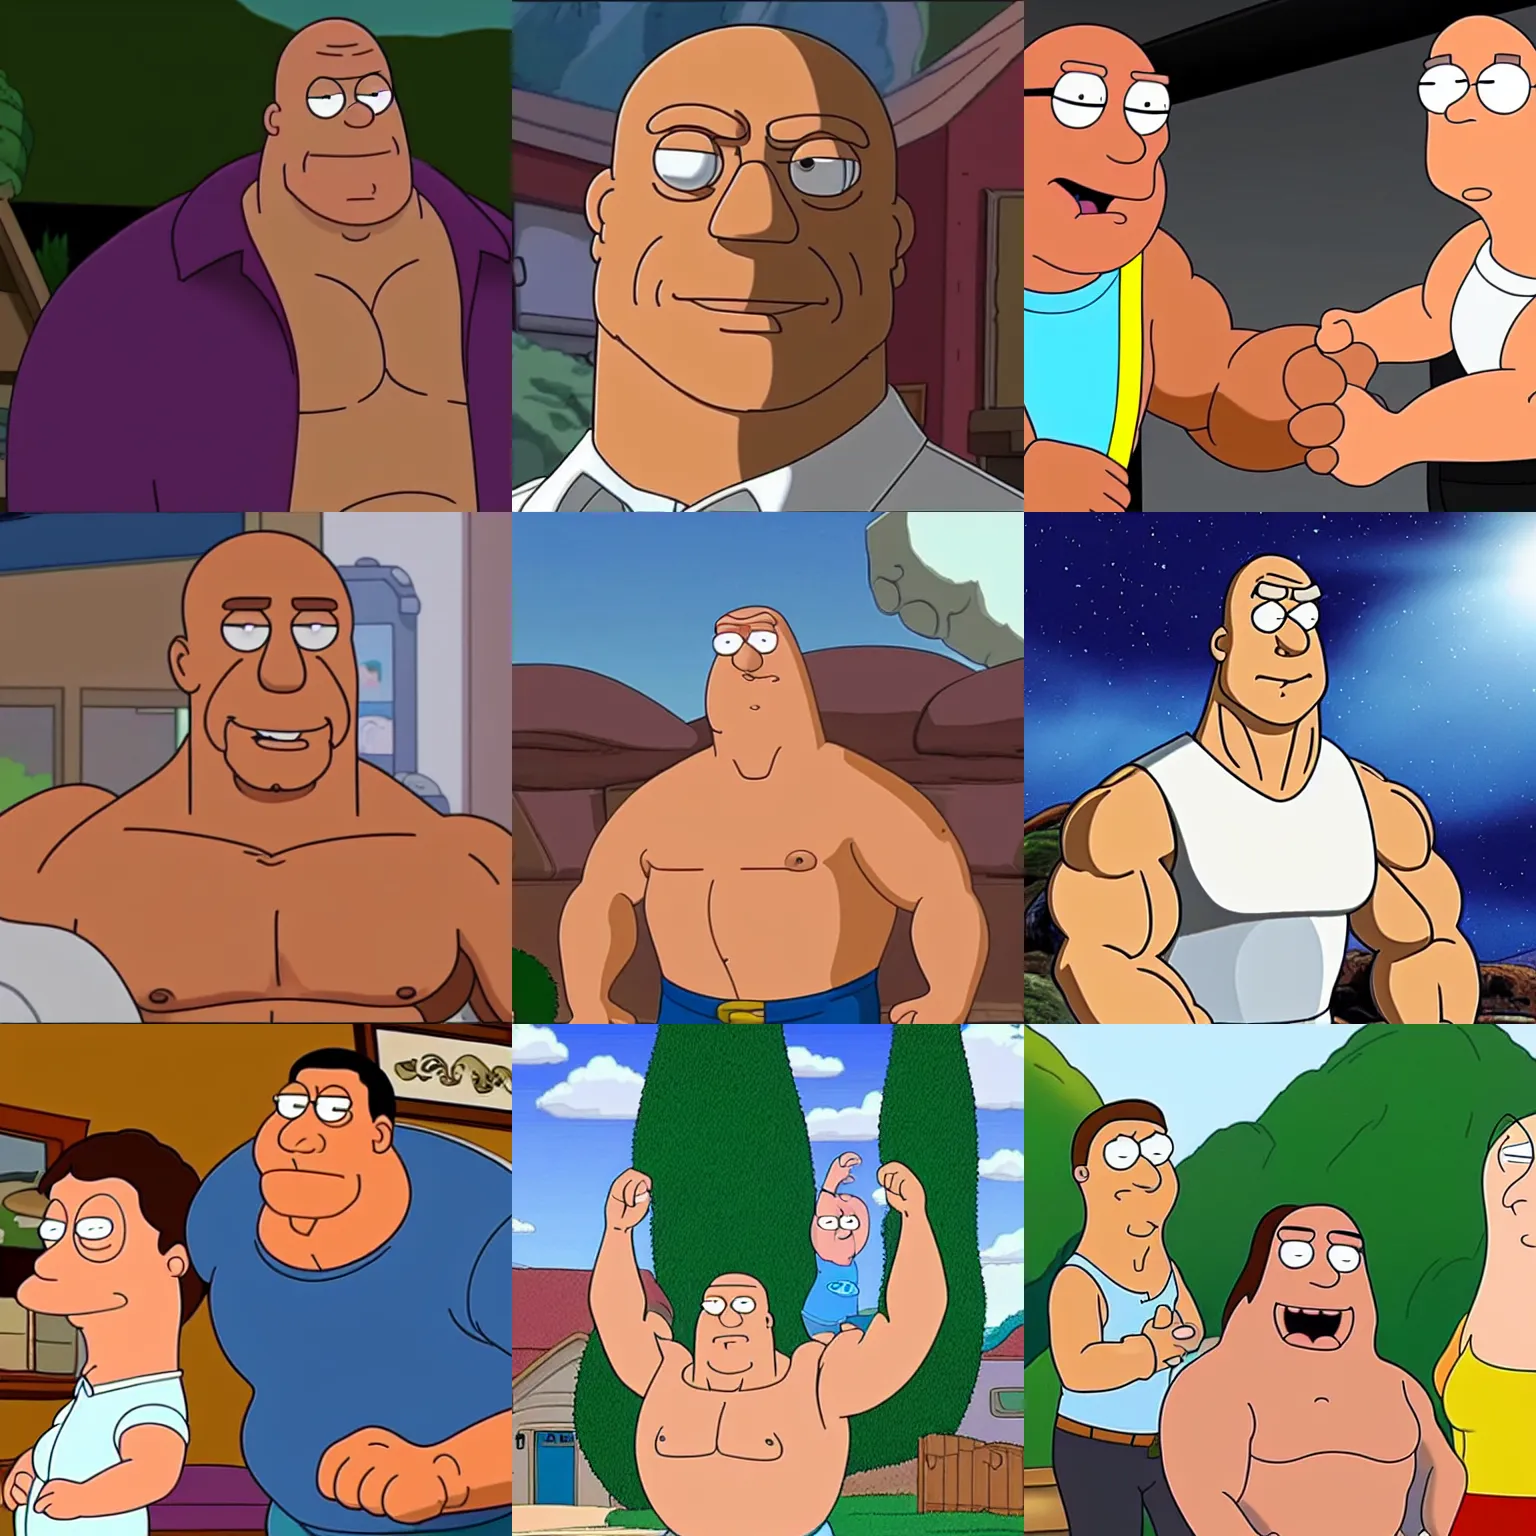 Prompt: Dwayne Johnson in Family Guy